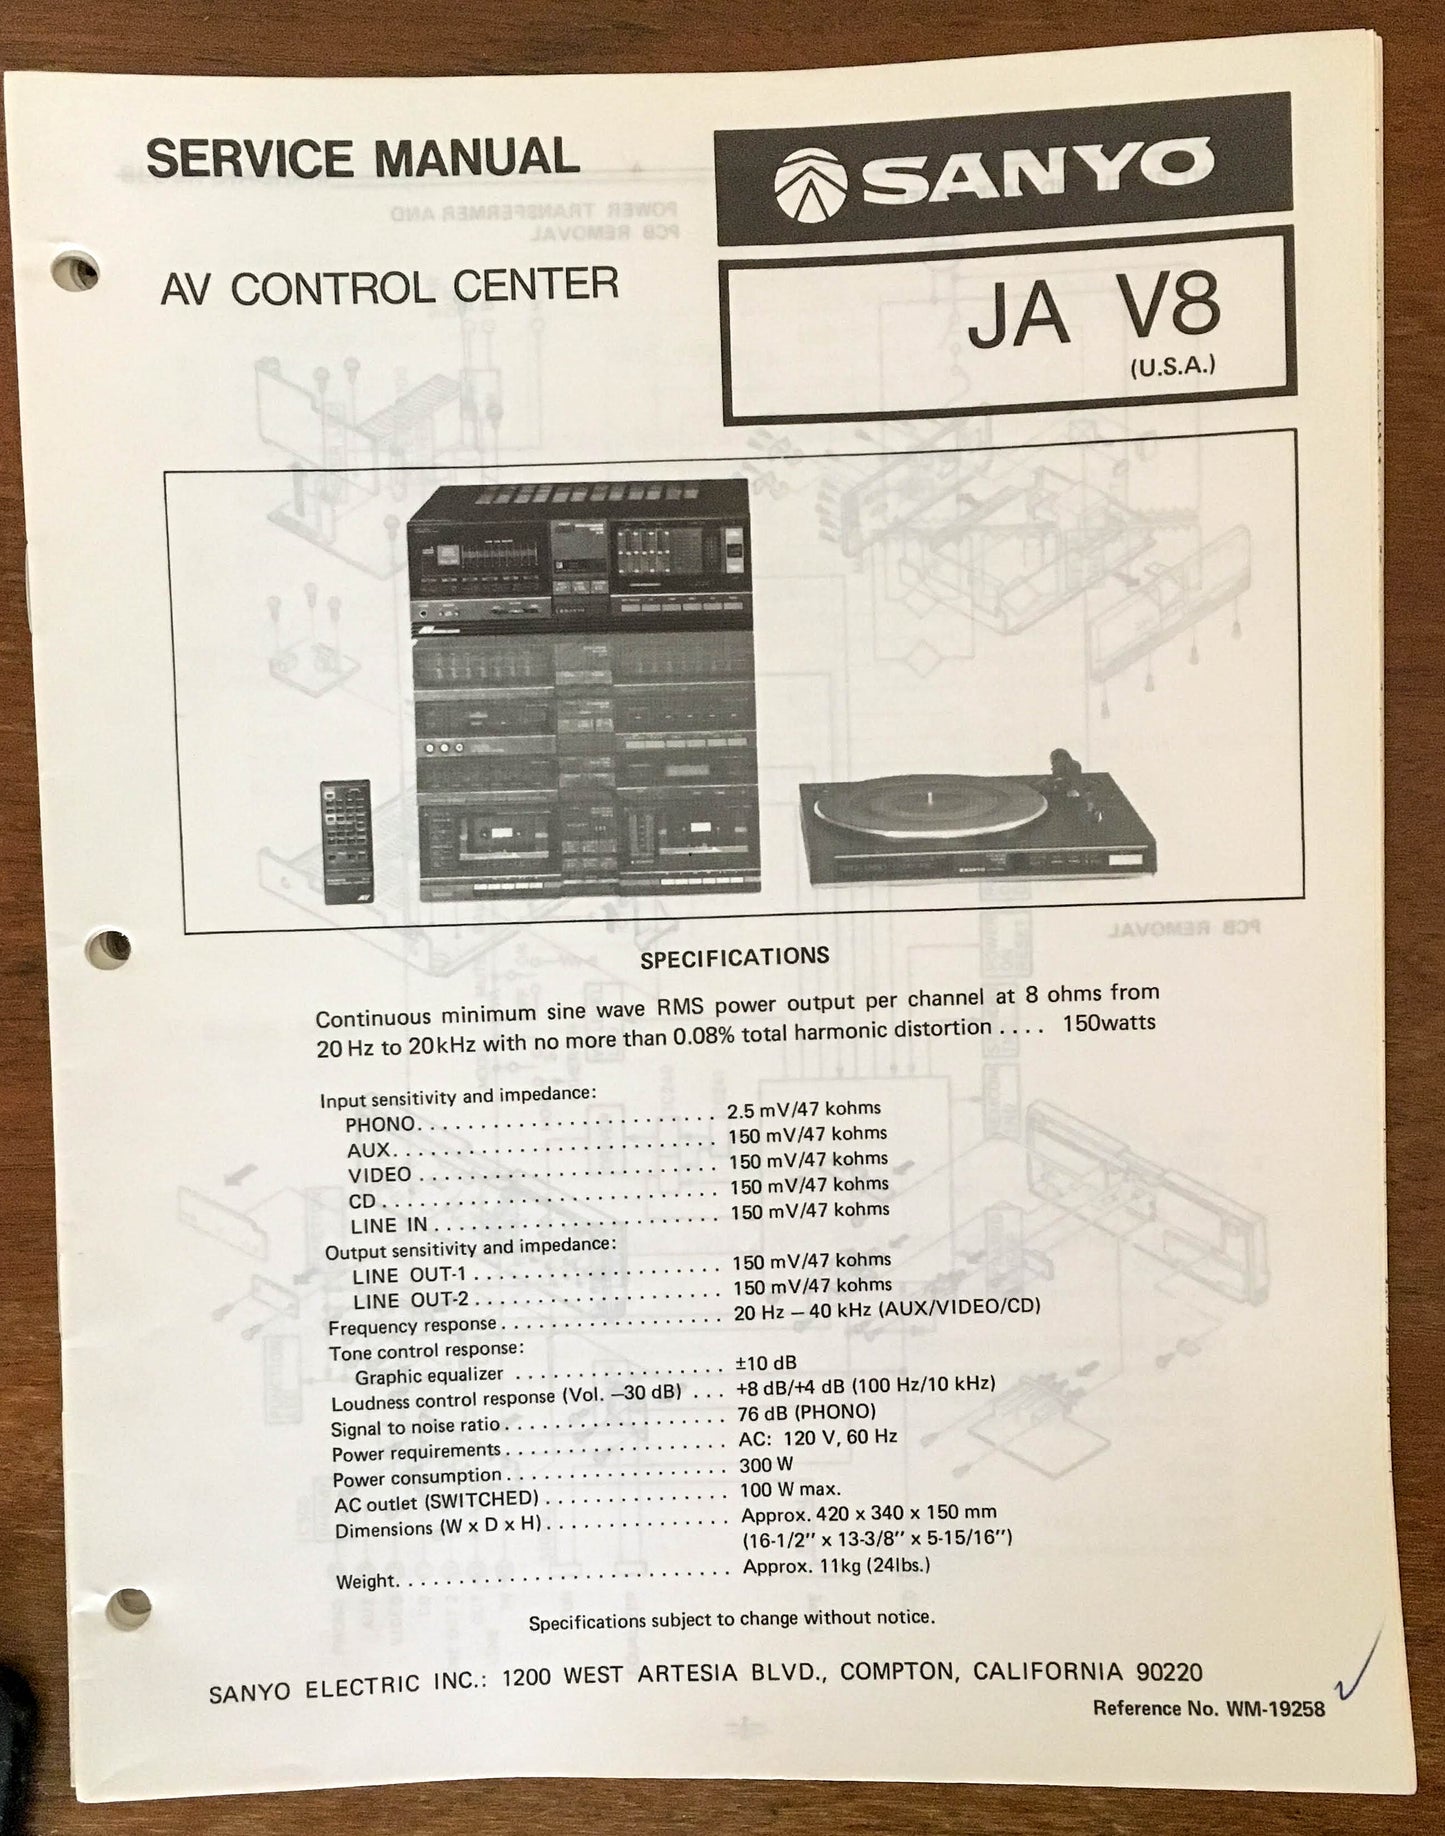 Sanyo JA V8 Stereo Control Center Service Manual *Original*